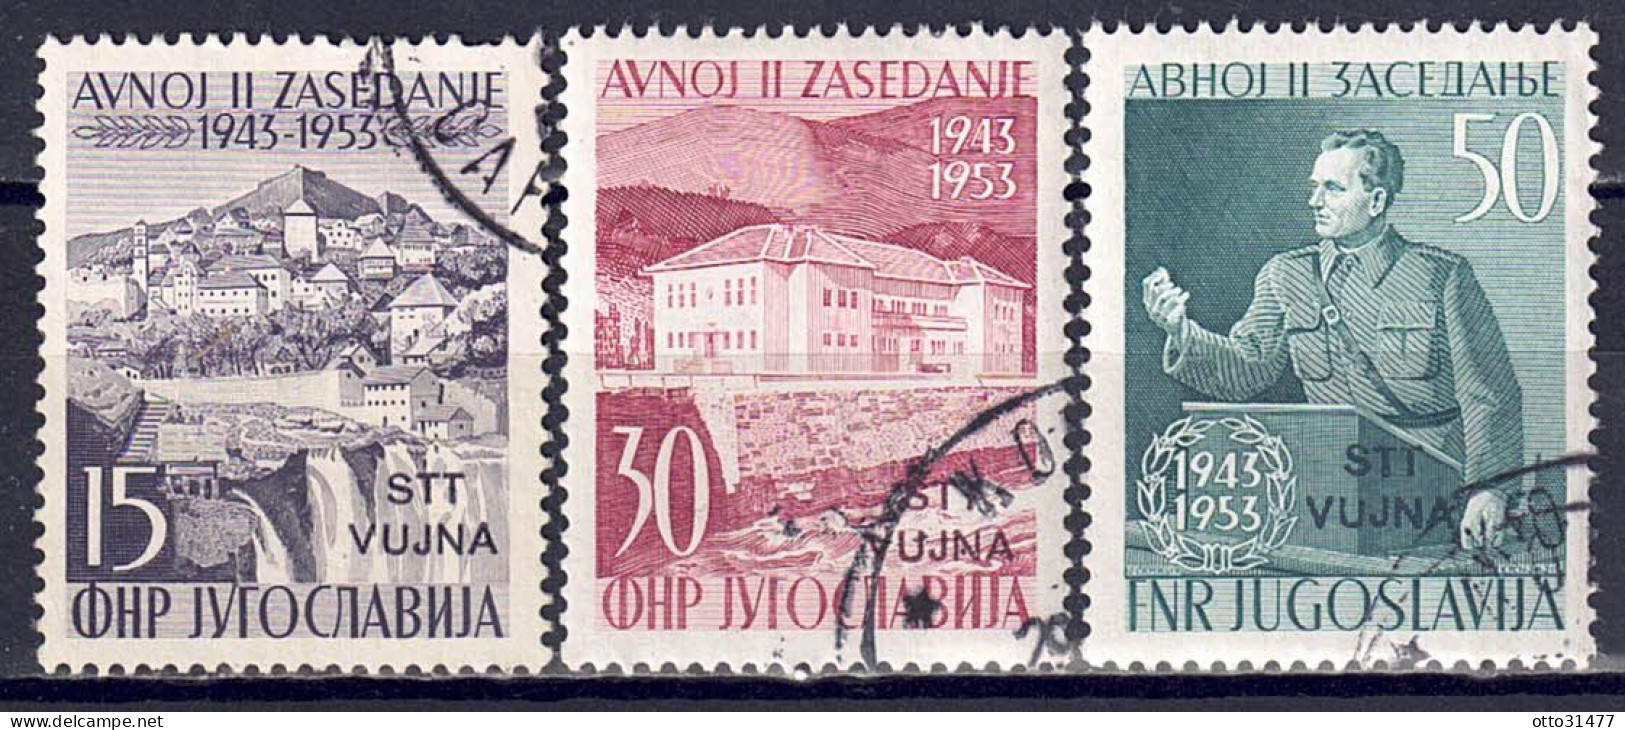 Italien / Triest Zone B - 1953 - AVNOJ, Nr. 107 - 109, Gestempelt / Used - Afgestempeld